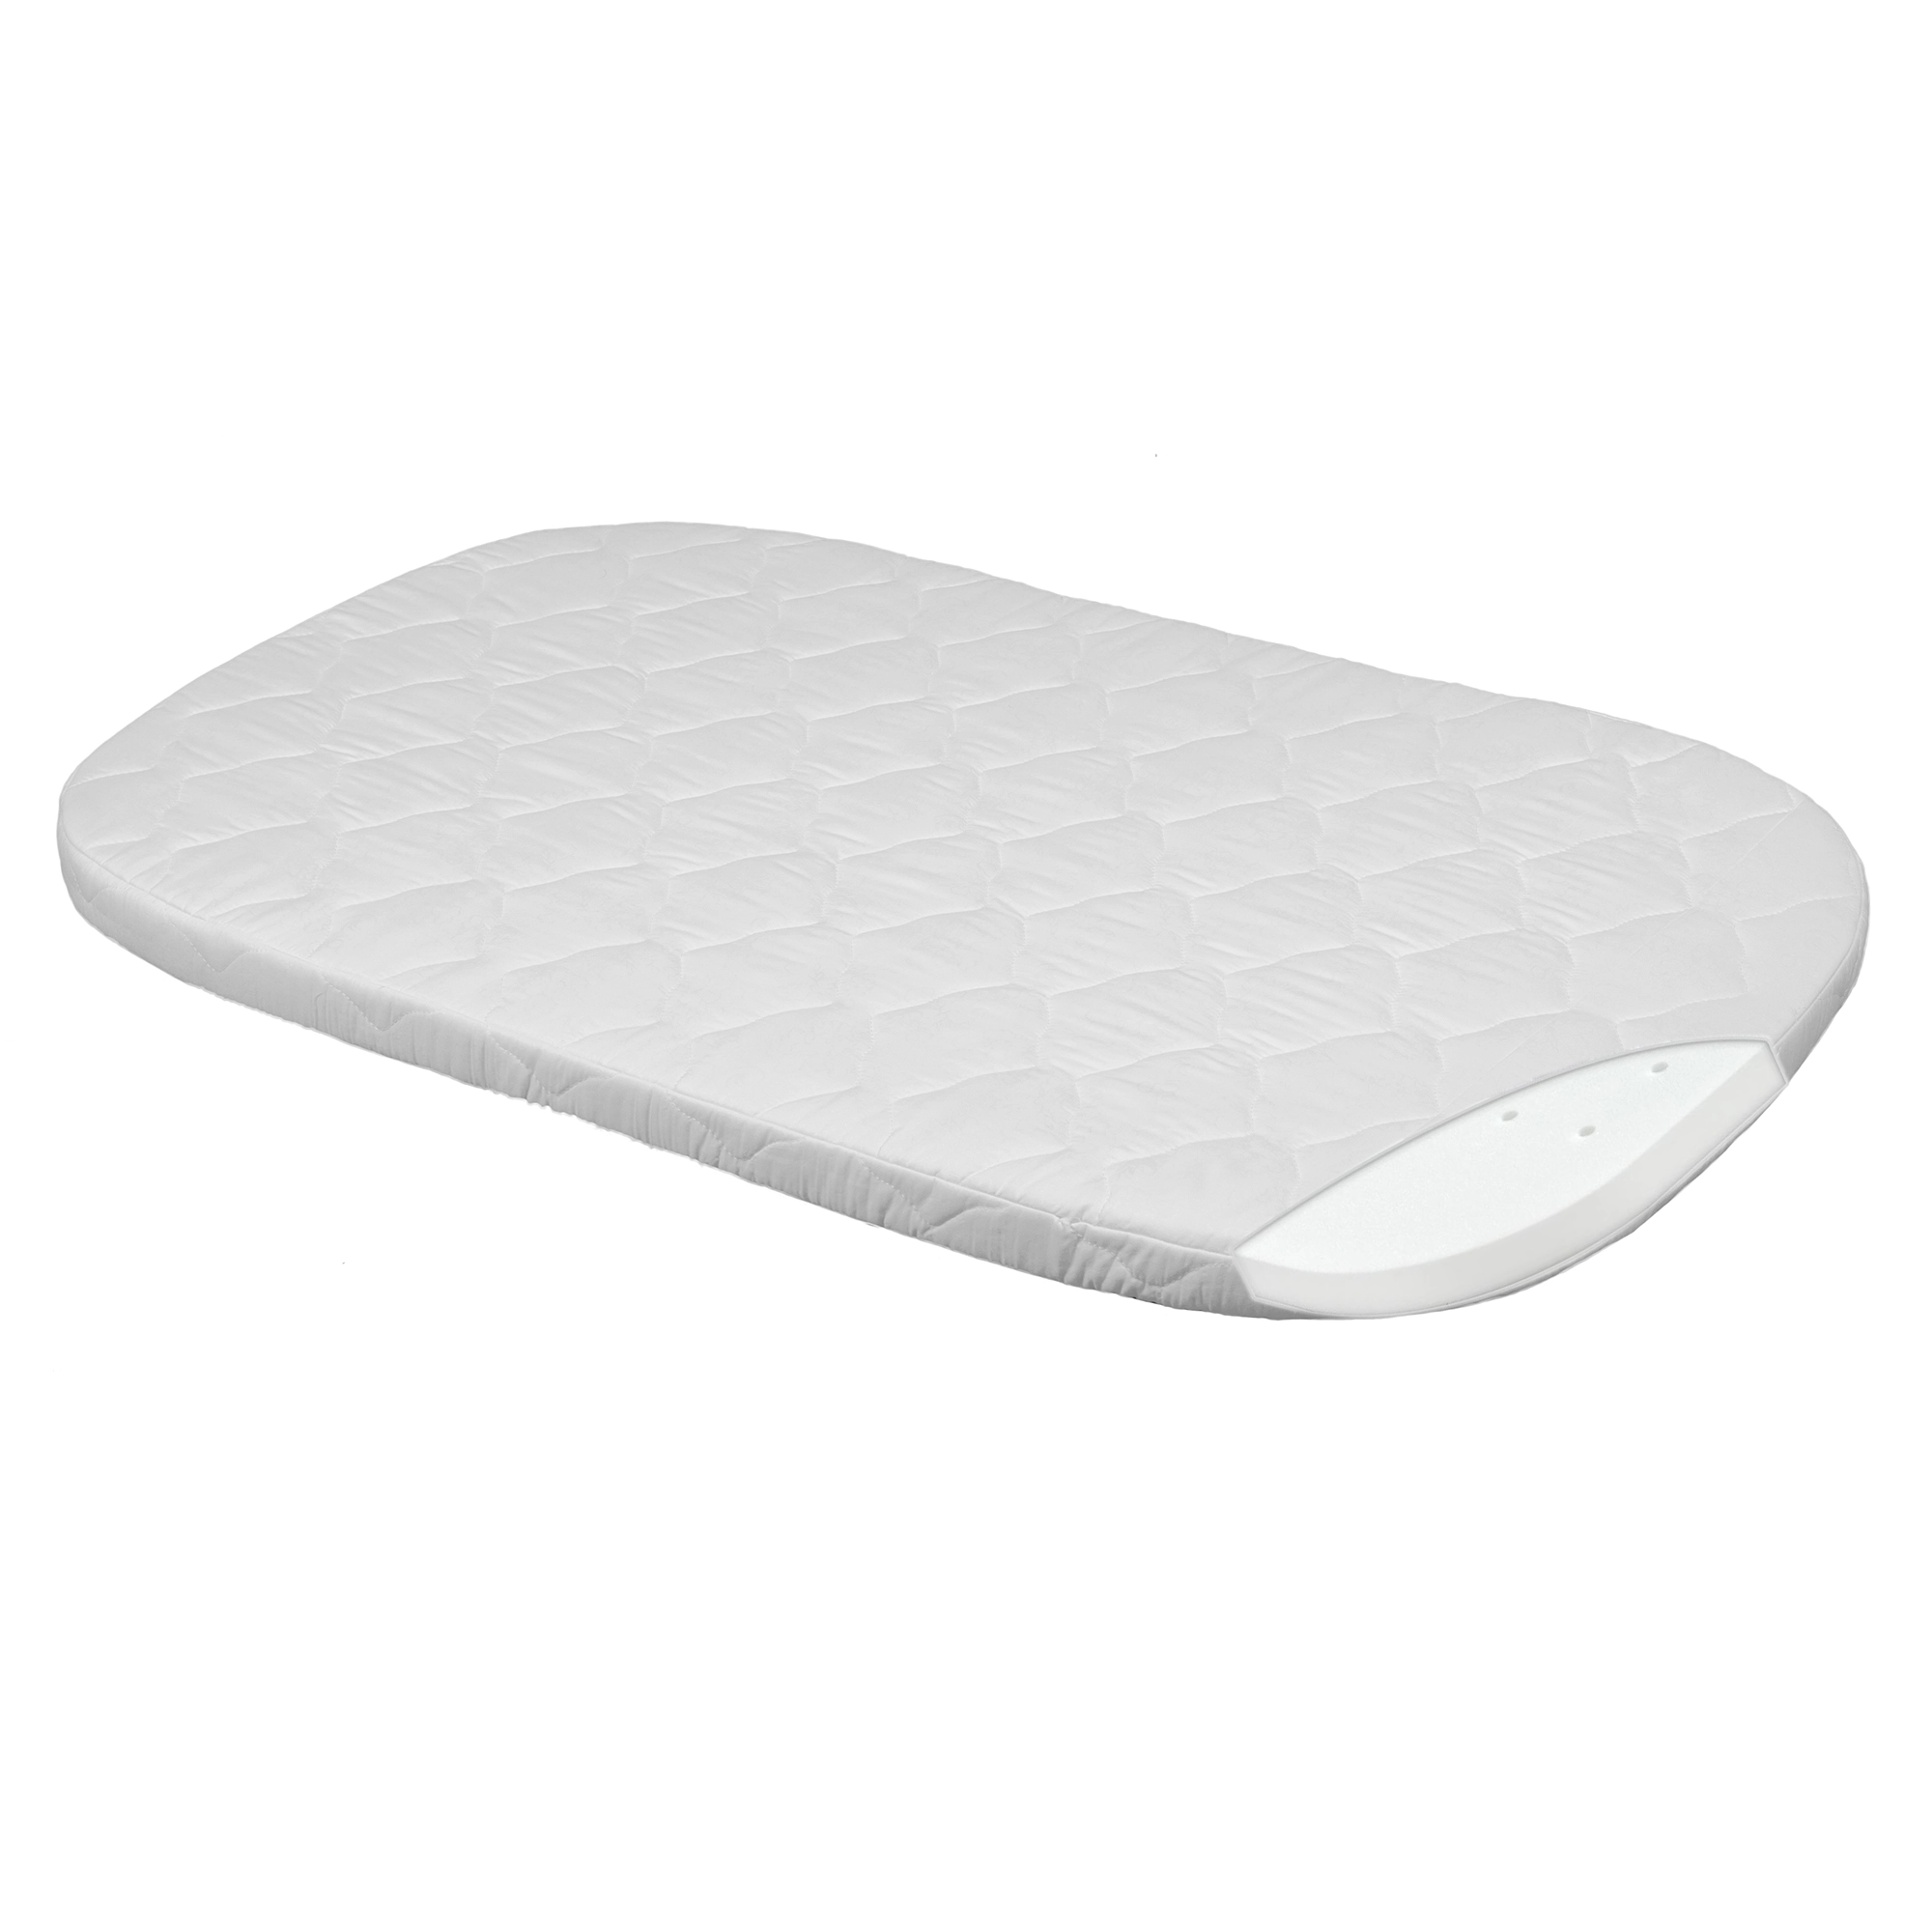 Mattress MAXI (70x120) - breathable foam core